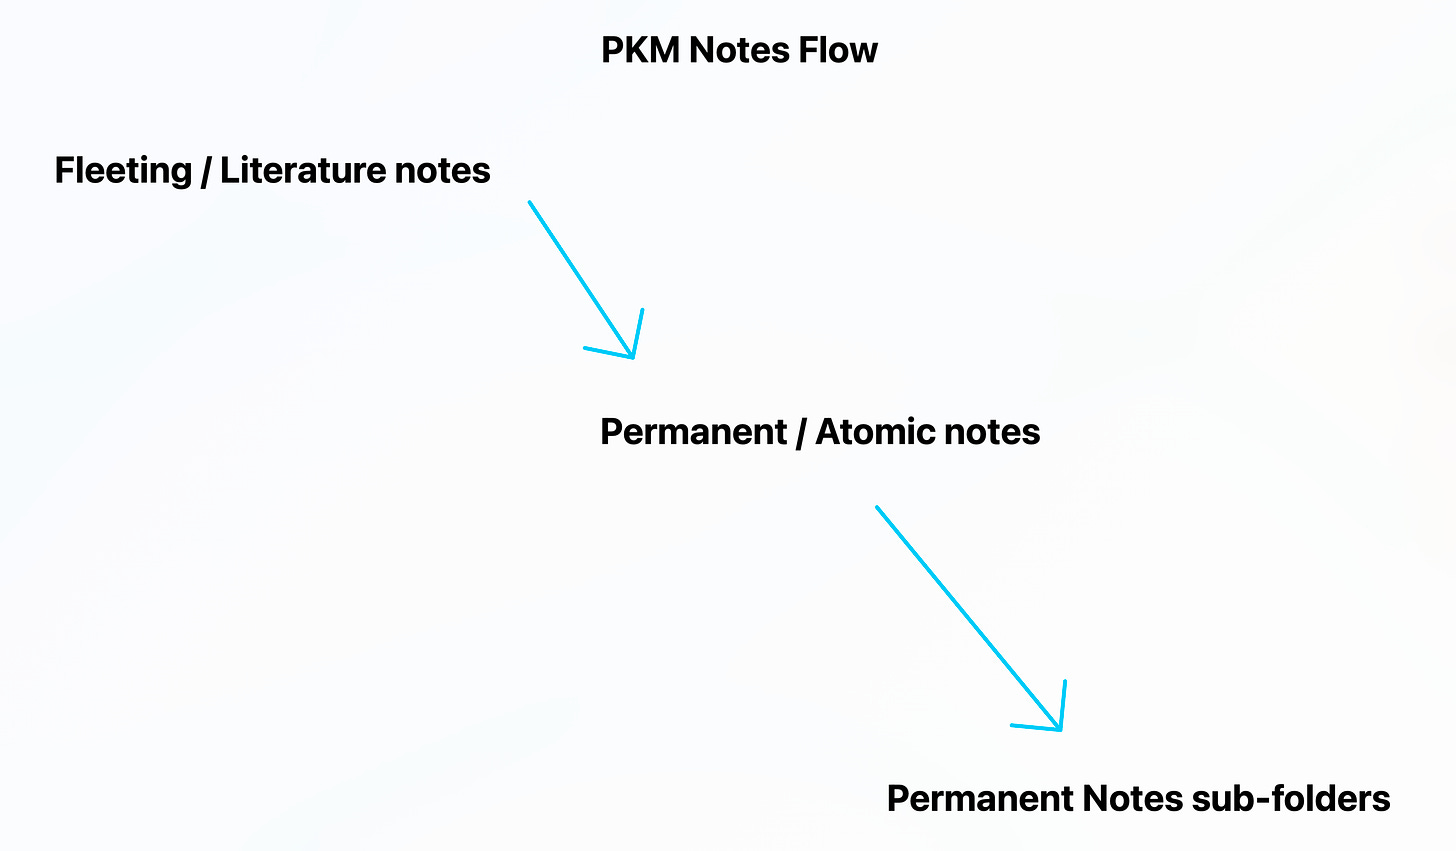 PKM notes flow